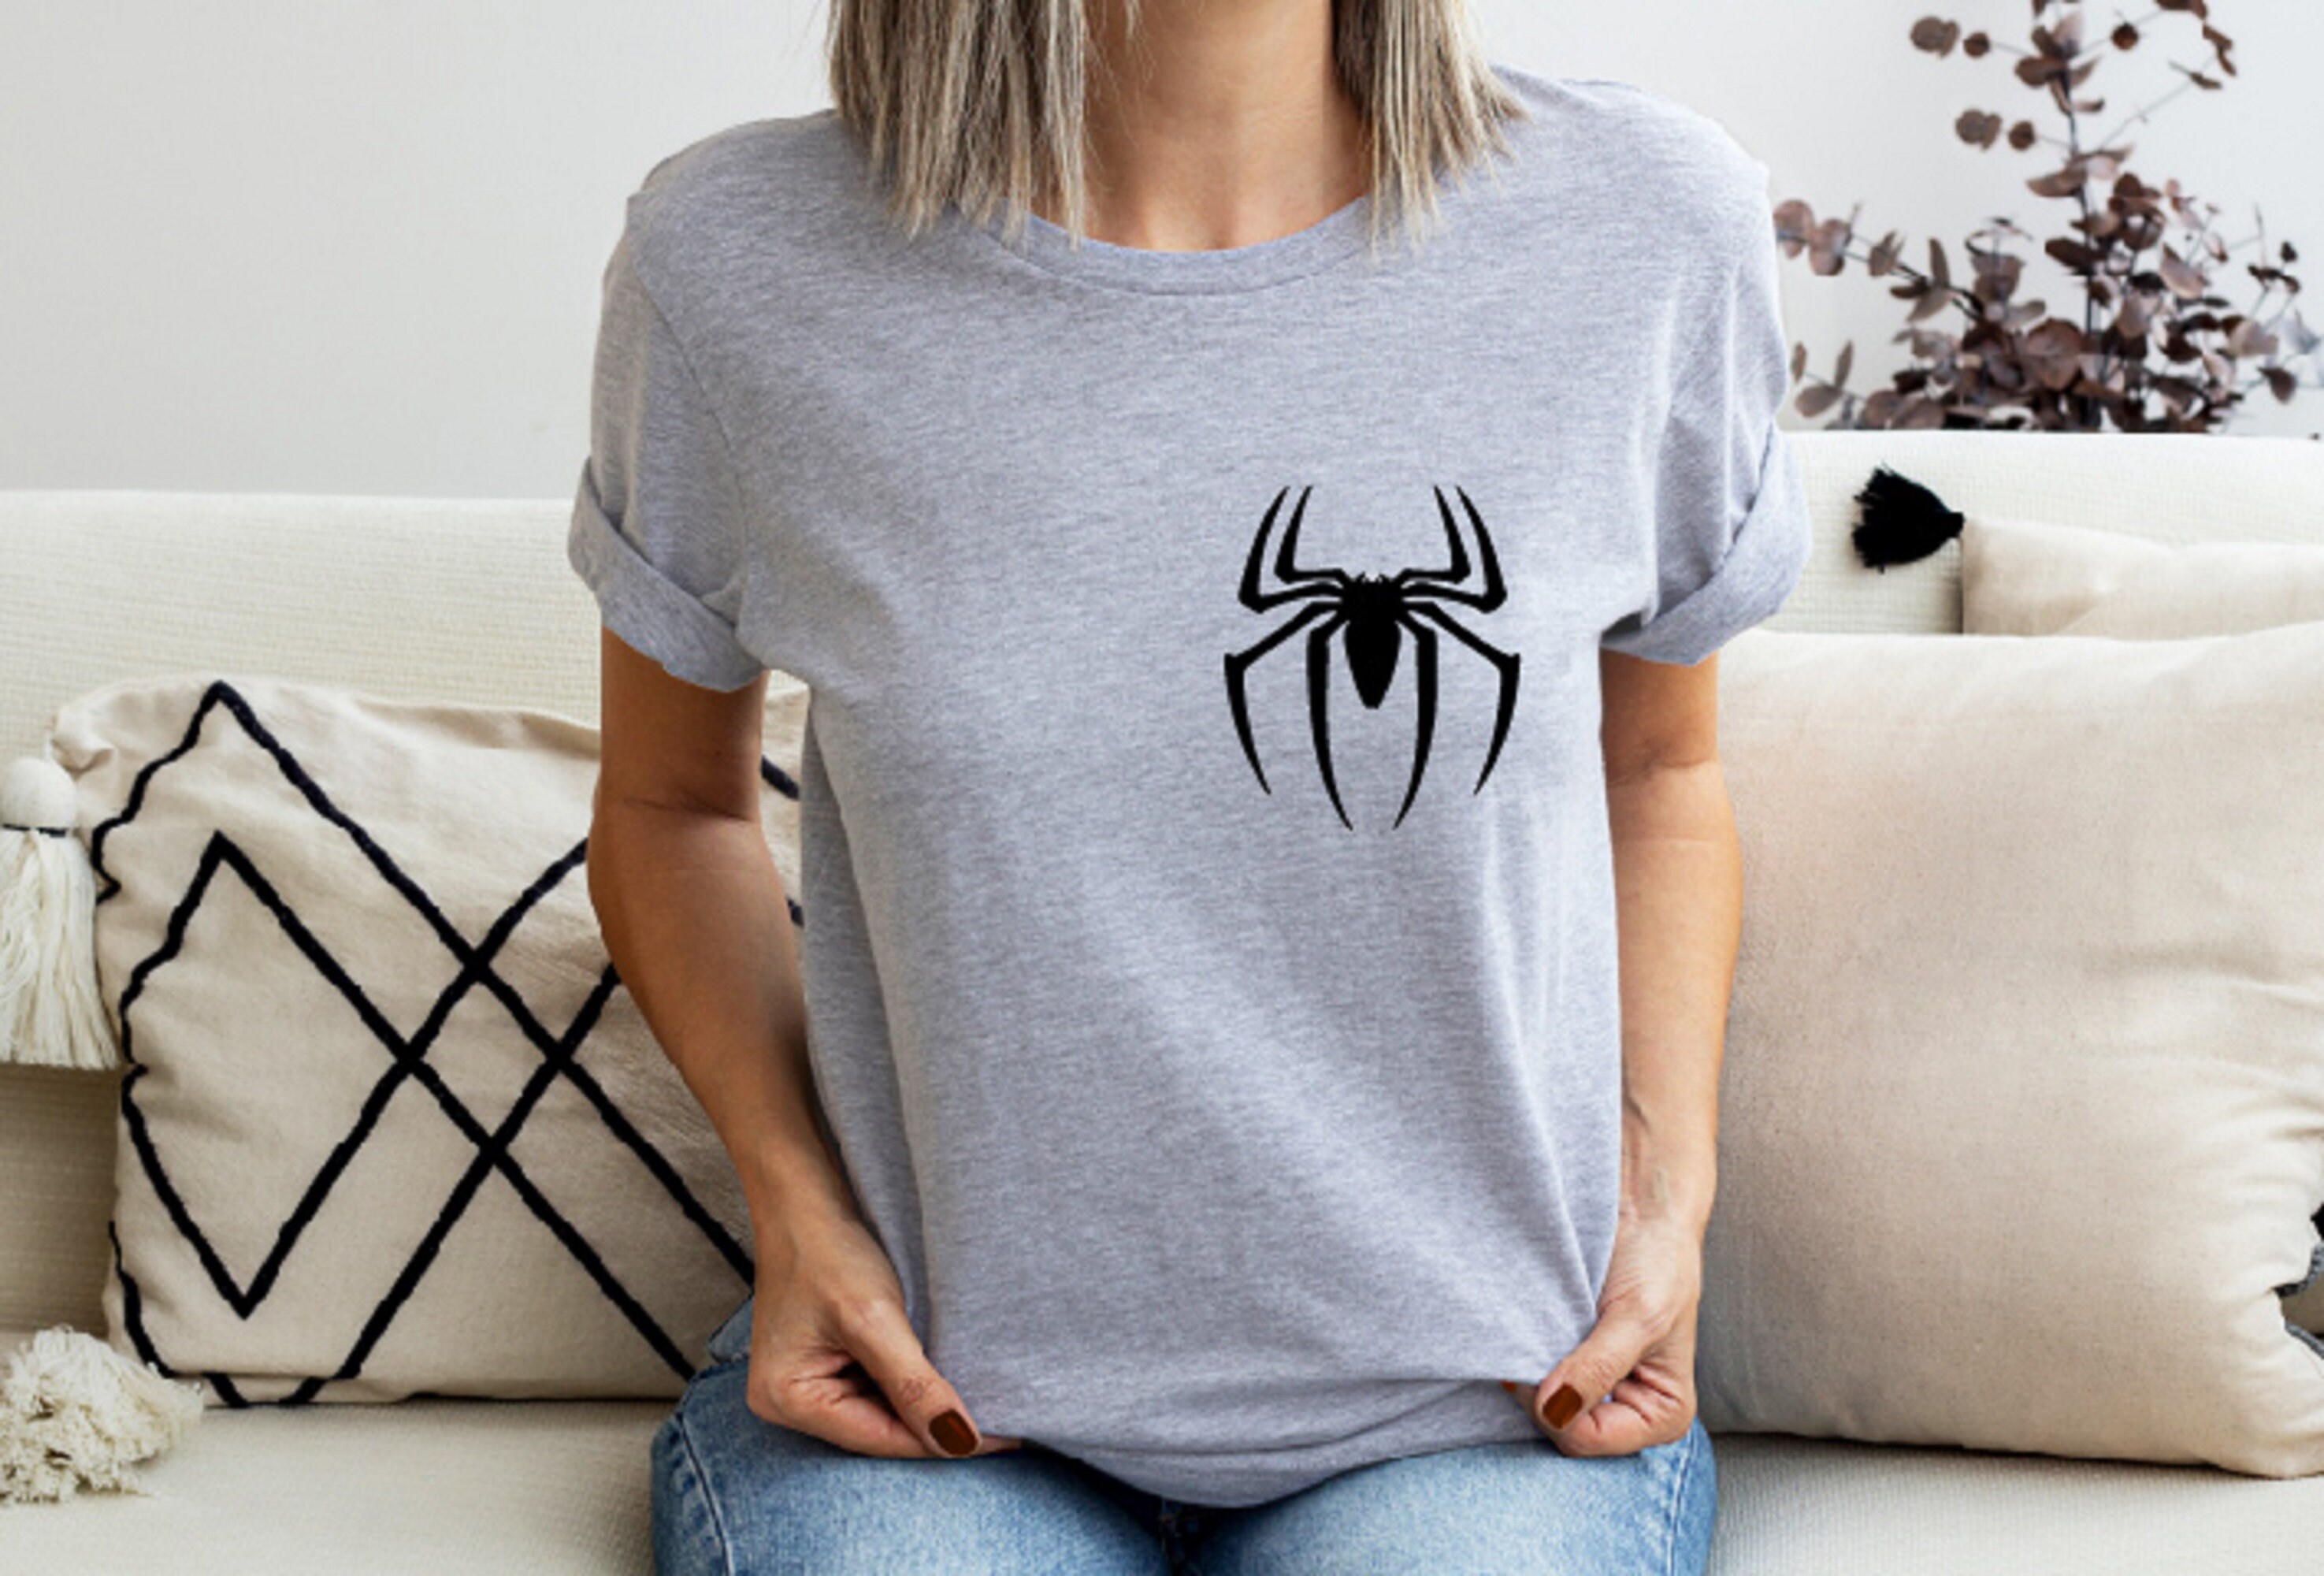 Discover Pocket Spider Shirt, Spiderman Tshirt, Spiderman Superhero Shirt, Small Spider Shirt, Spider Lover Tee, Halloween Shirts, Animal Shirt